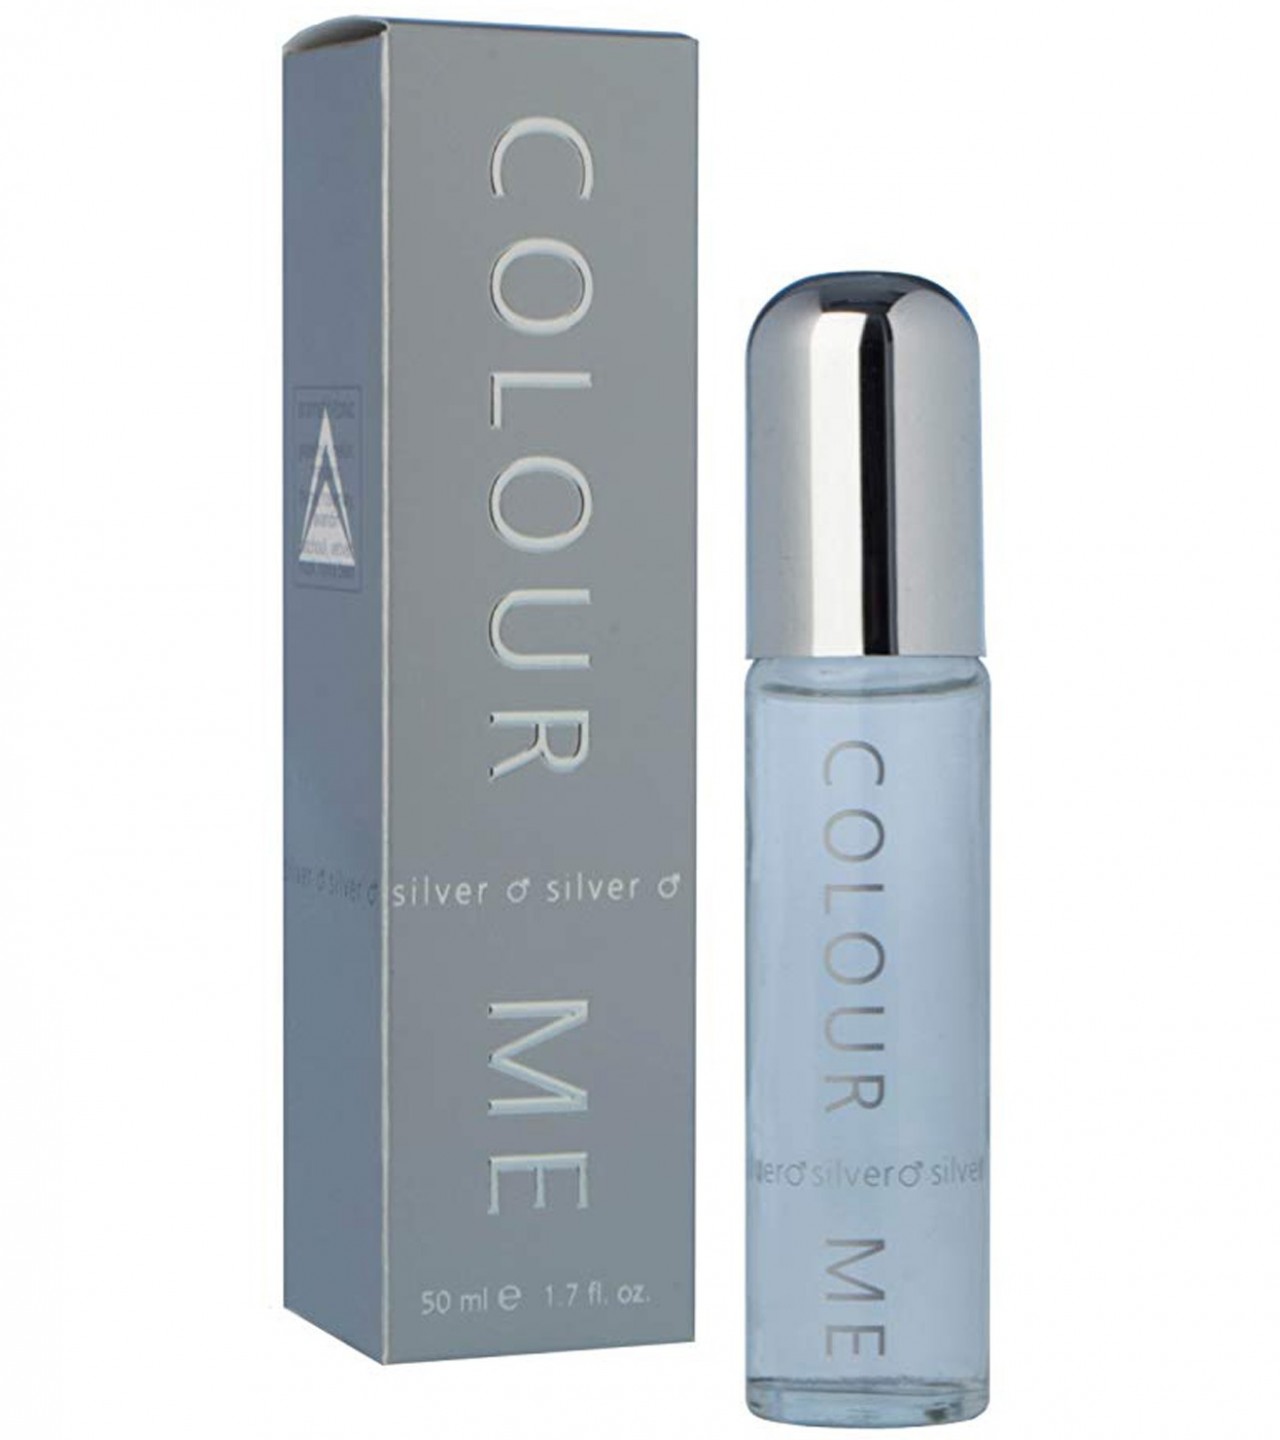 Milton Lloyd Colour Me Silver Perfume For Men – 50 ml